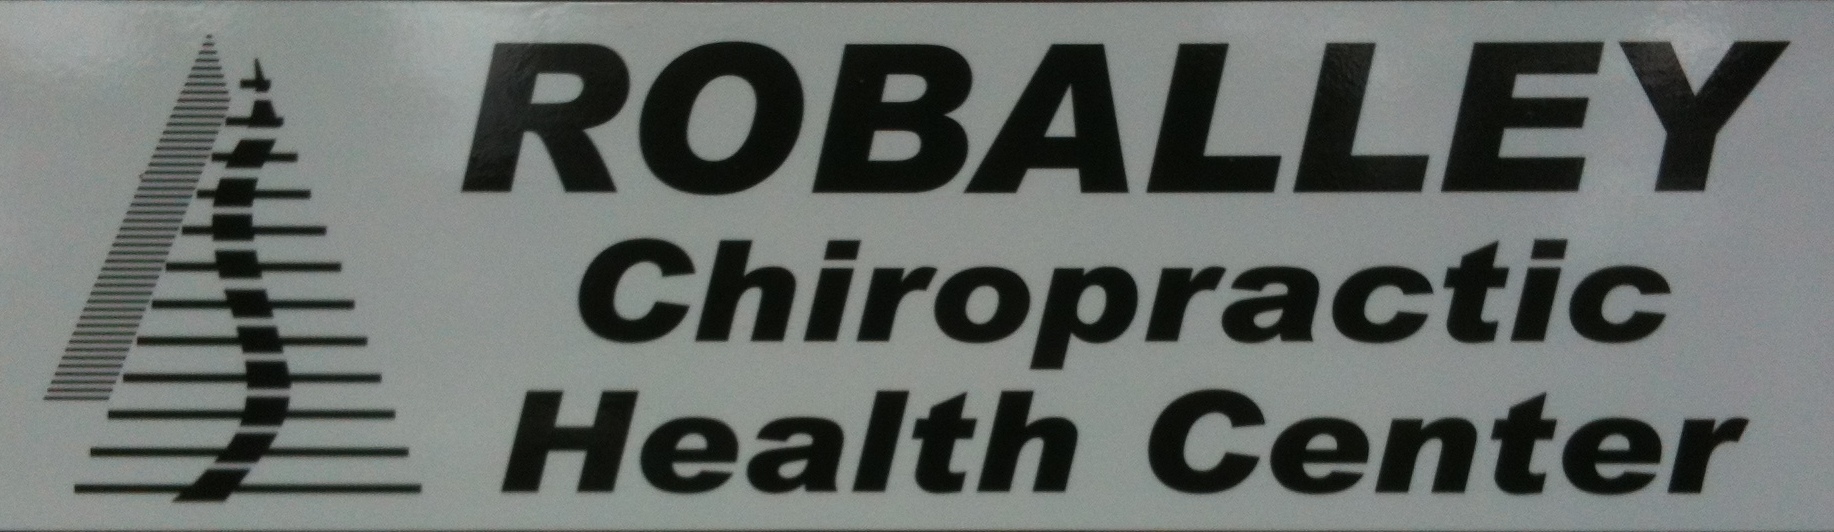 Roballey Chiropractic Health Center